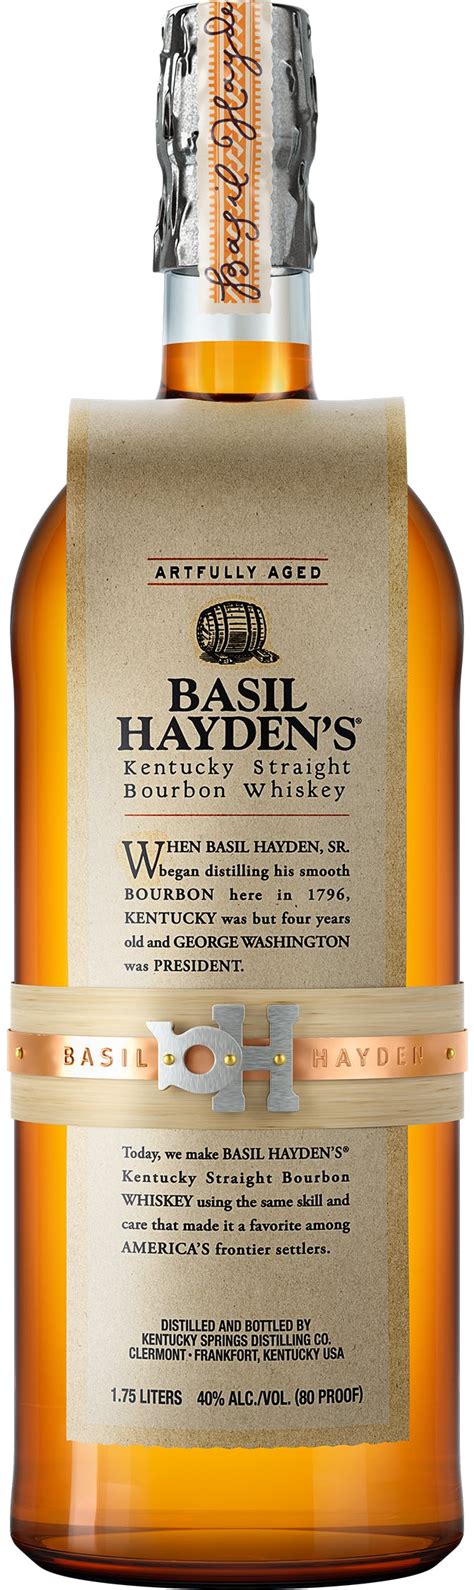 Basil Hayden Bourbon Price